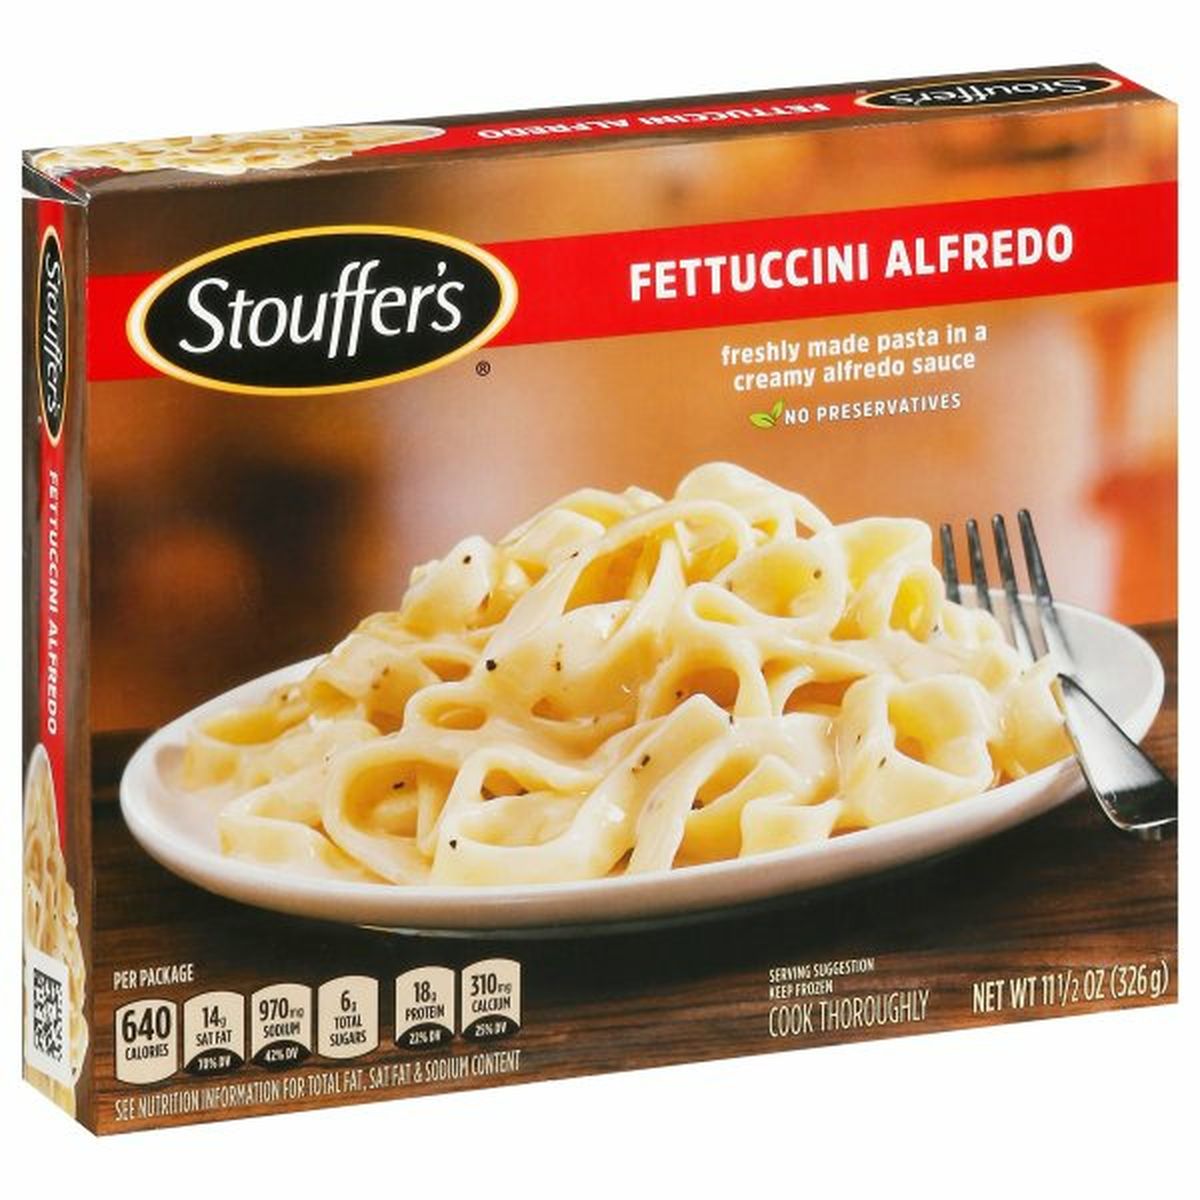 Calories in Stouffer's Fettuccini Alfredo